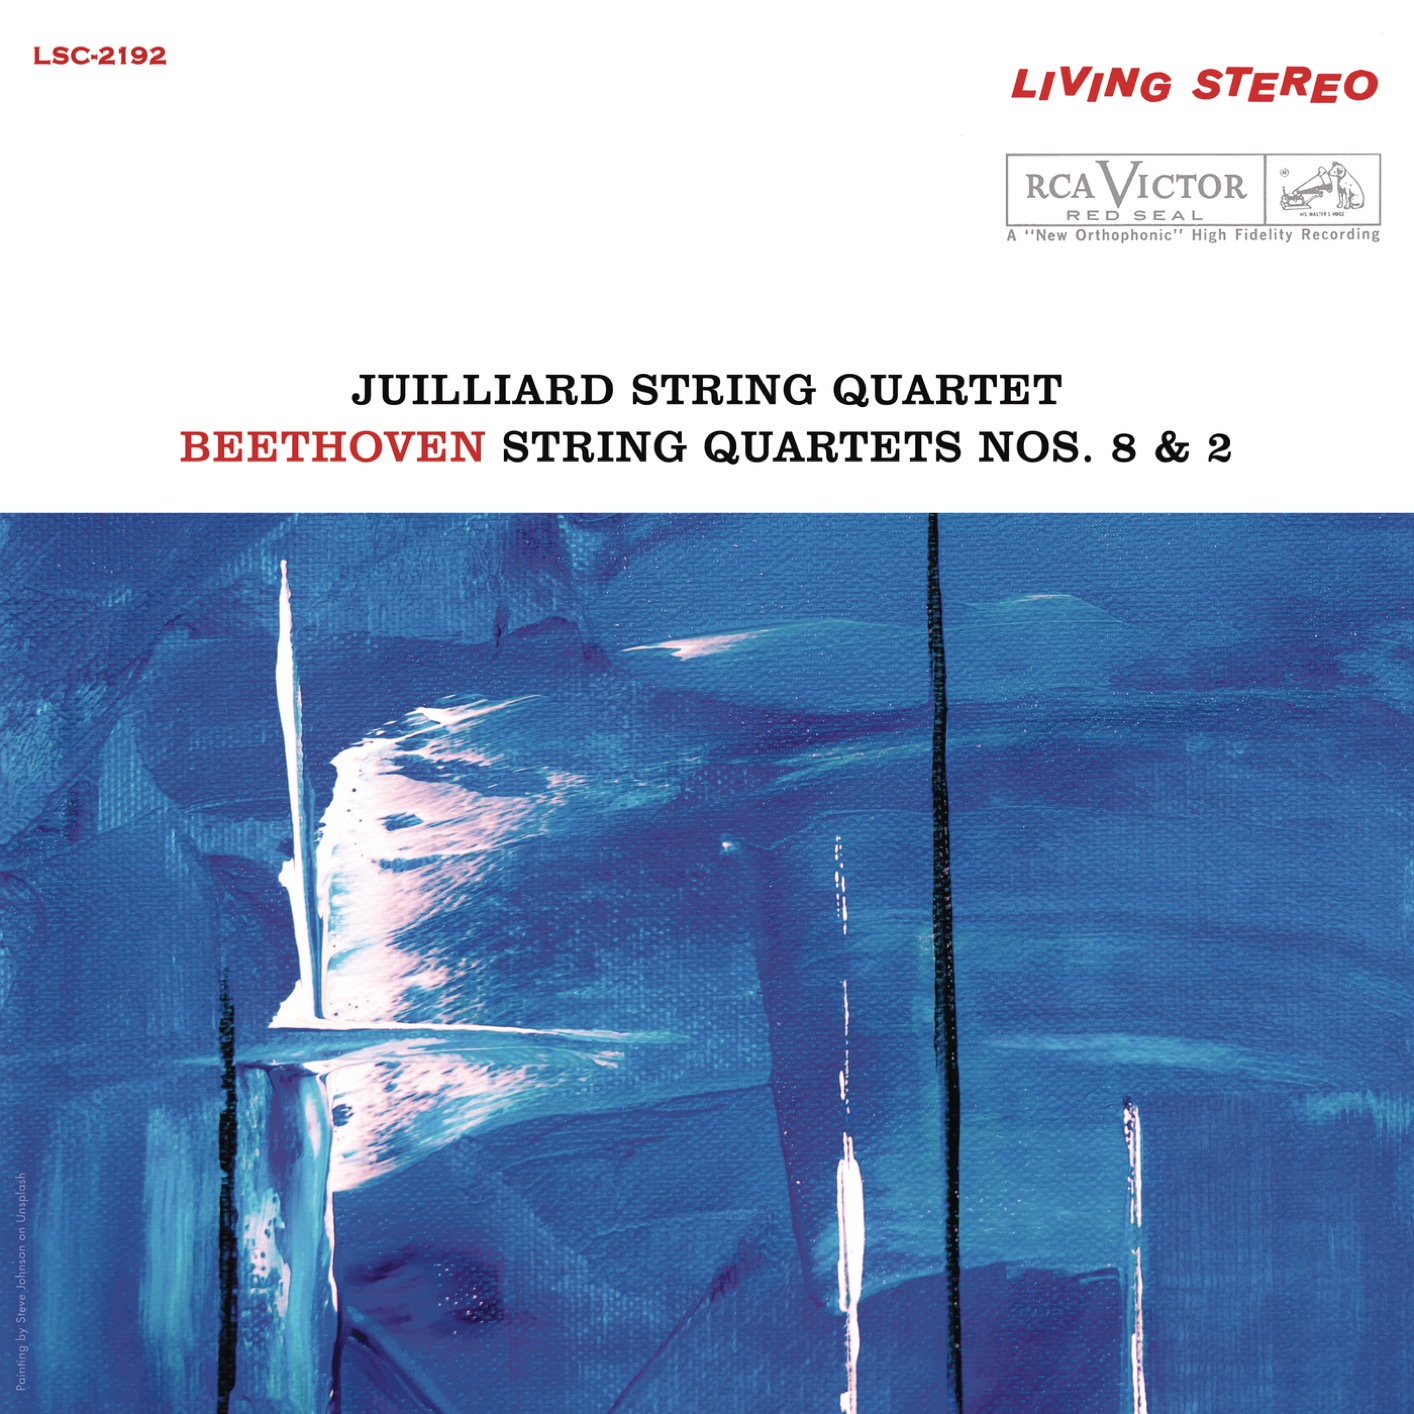 Juilliard String Quartet - Beethoven: String Quartet Nos. 8 & 2 (1959/2019) [FLAC 24bit/96kHz]